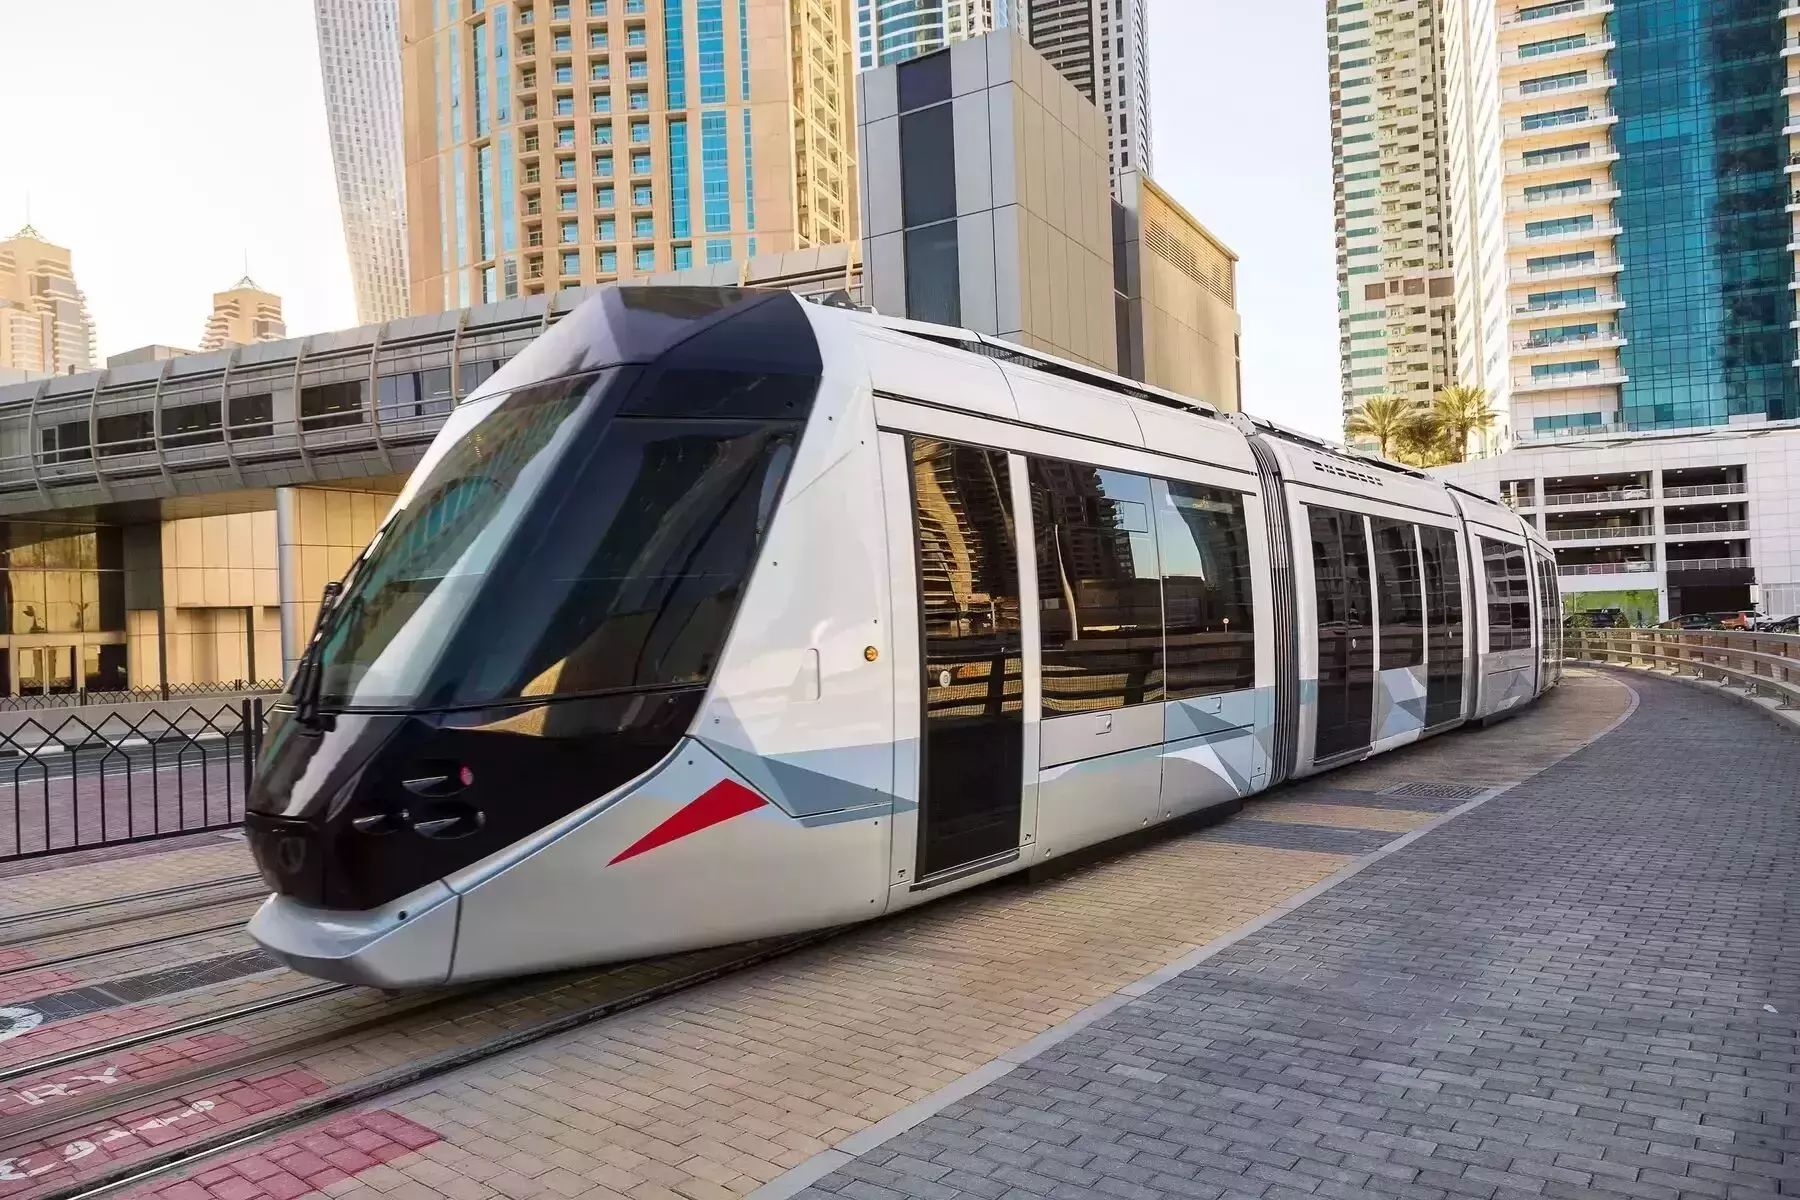 UAE: Public transport timings announced for Eid Al Adha holidays